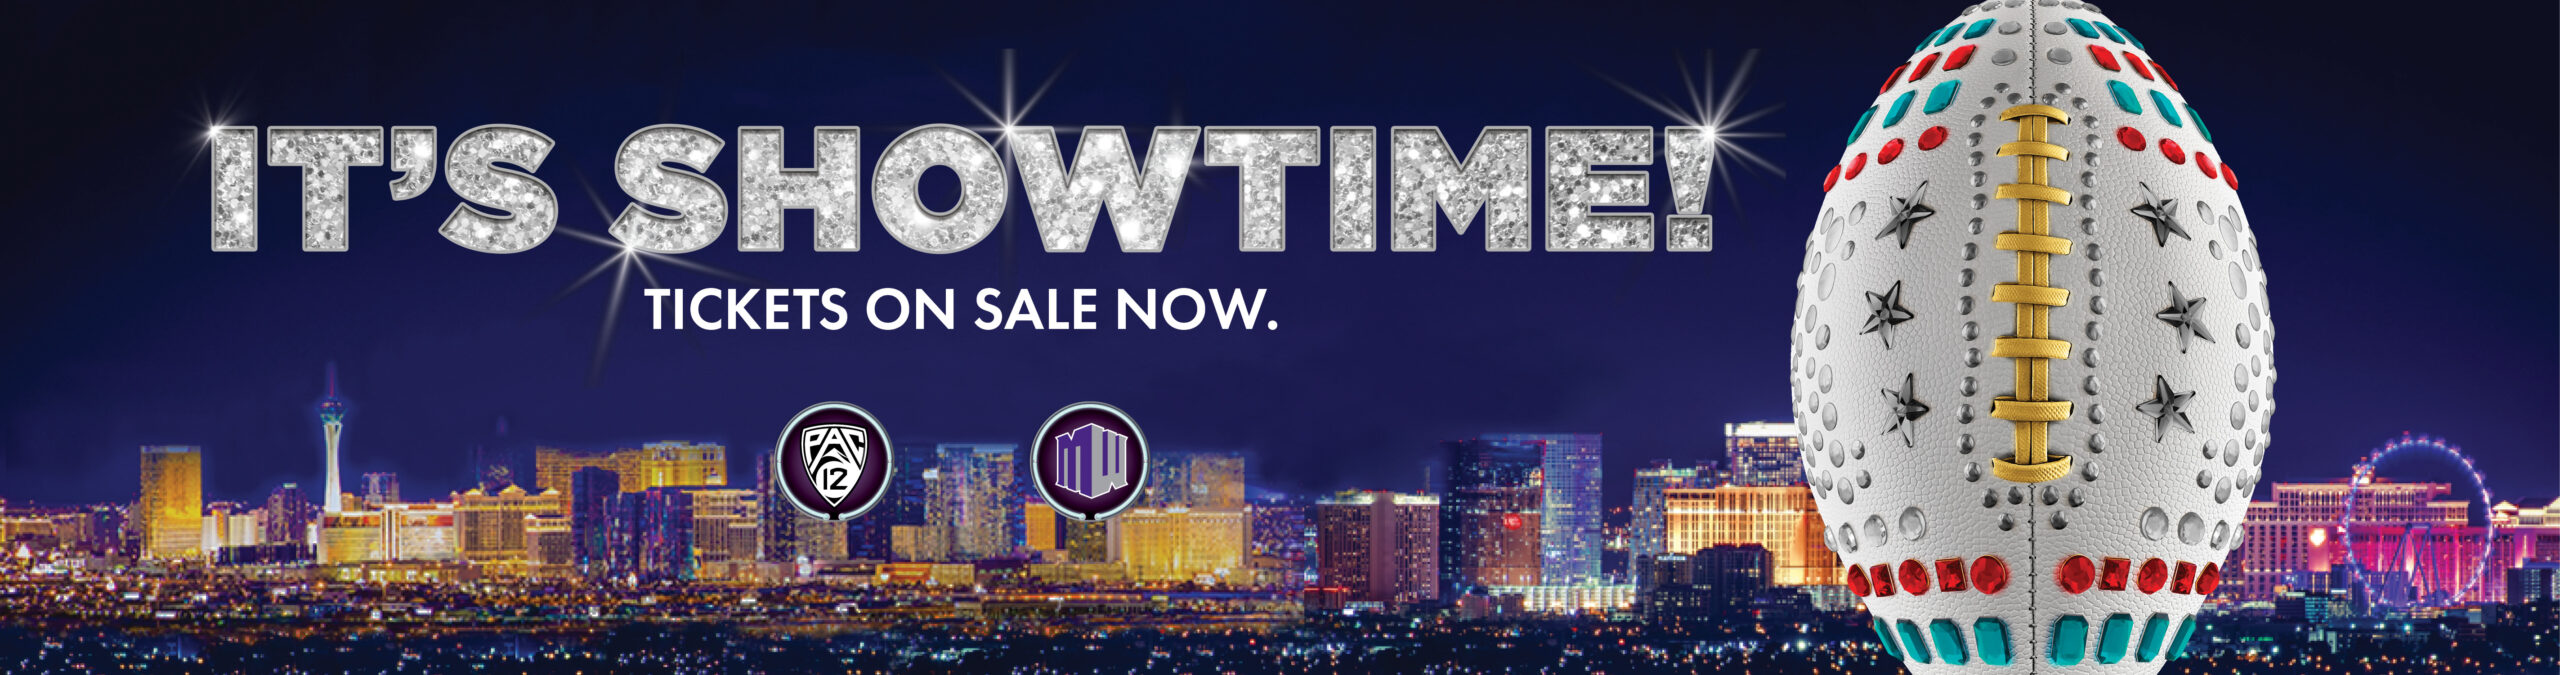 2019 Las Vegas Bowl Tickets On Sale Now